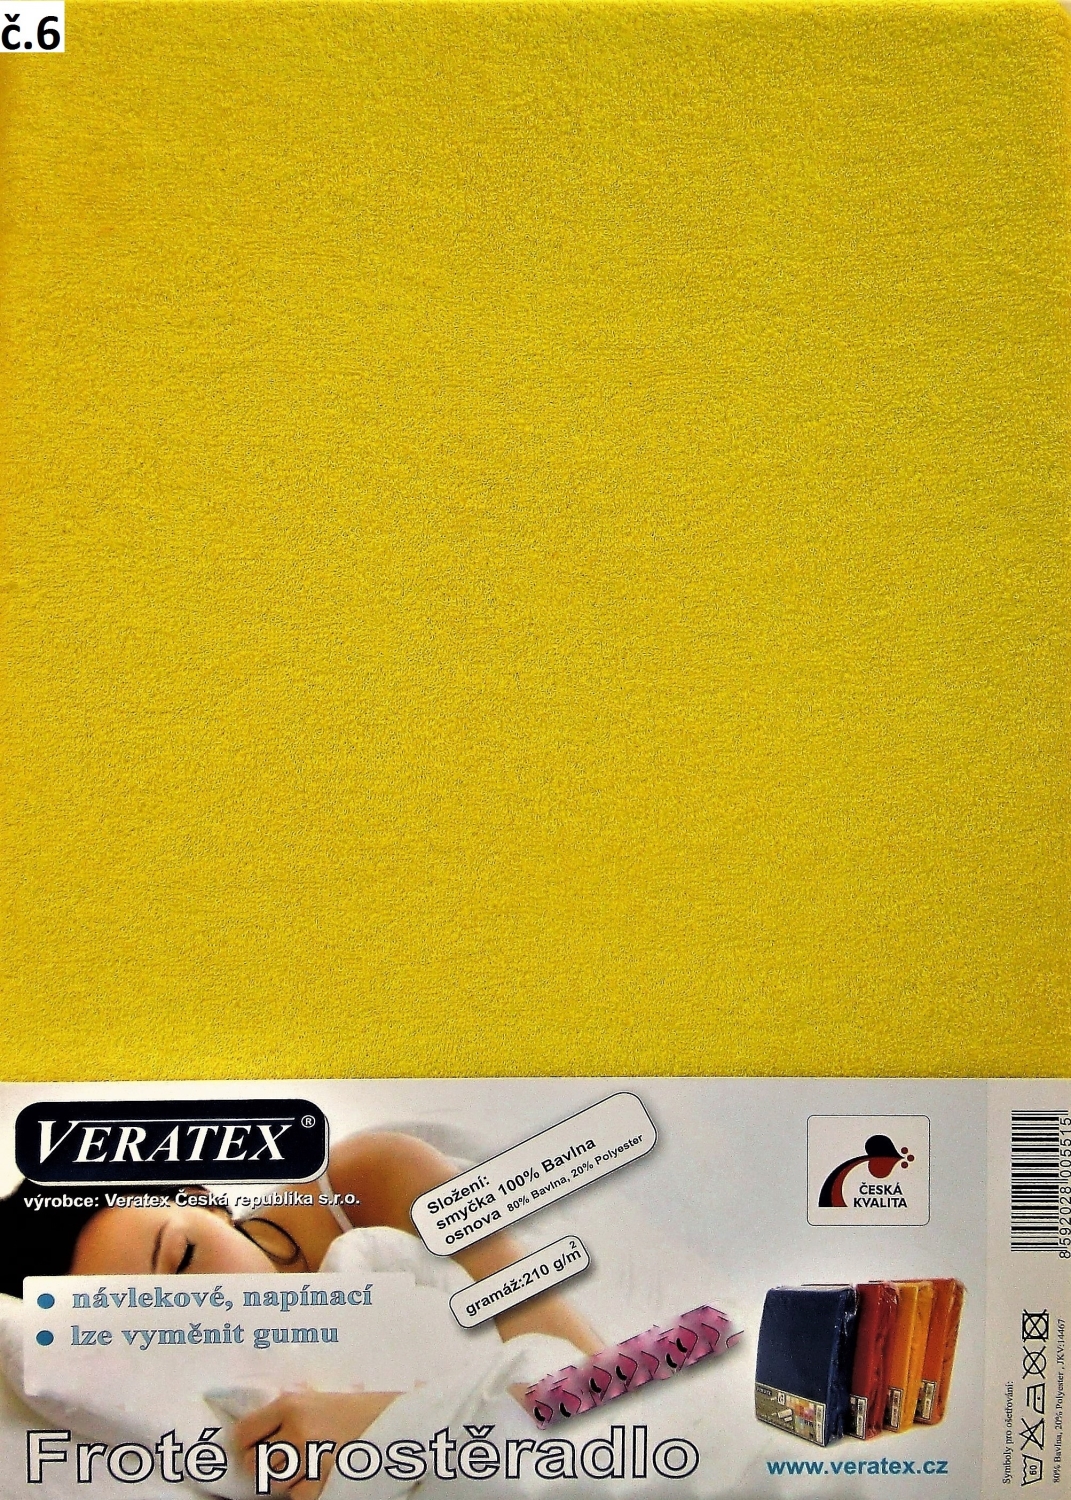 Veratex Froté prostěradlo 200 x 240 cm (č. 6-stř.žlutá) 200 x 240 cm